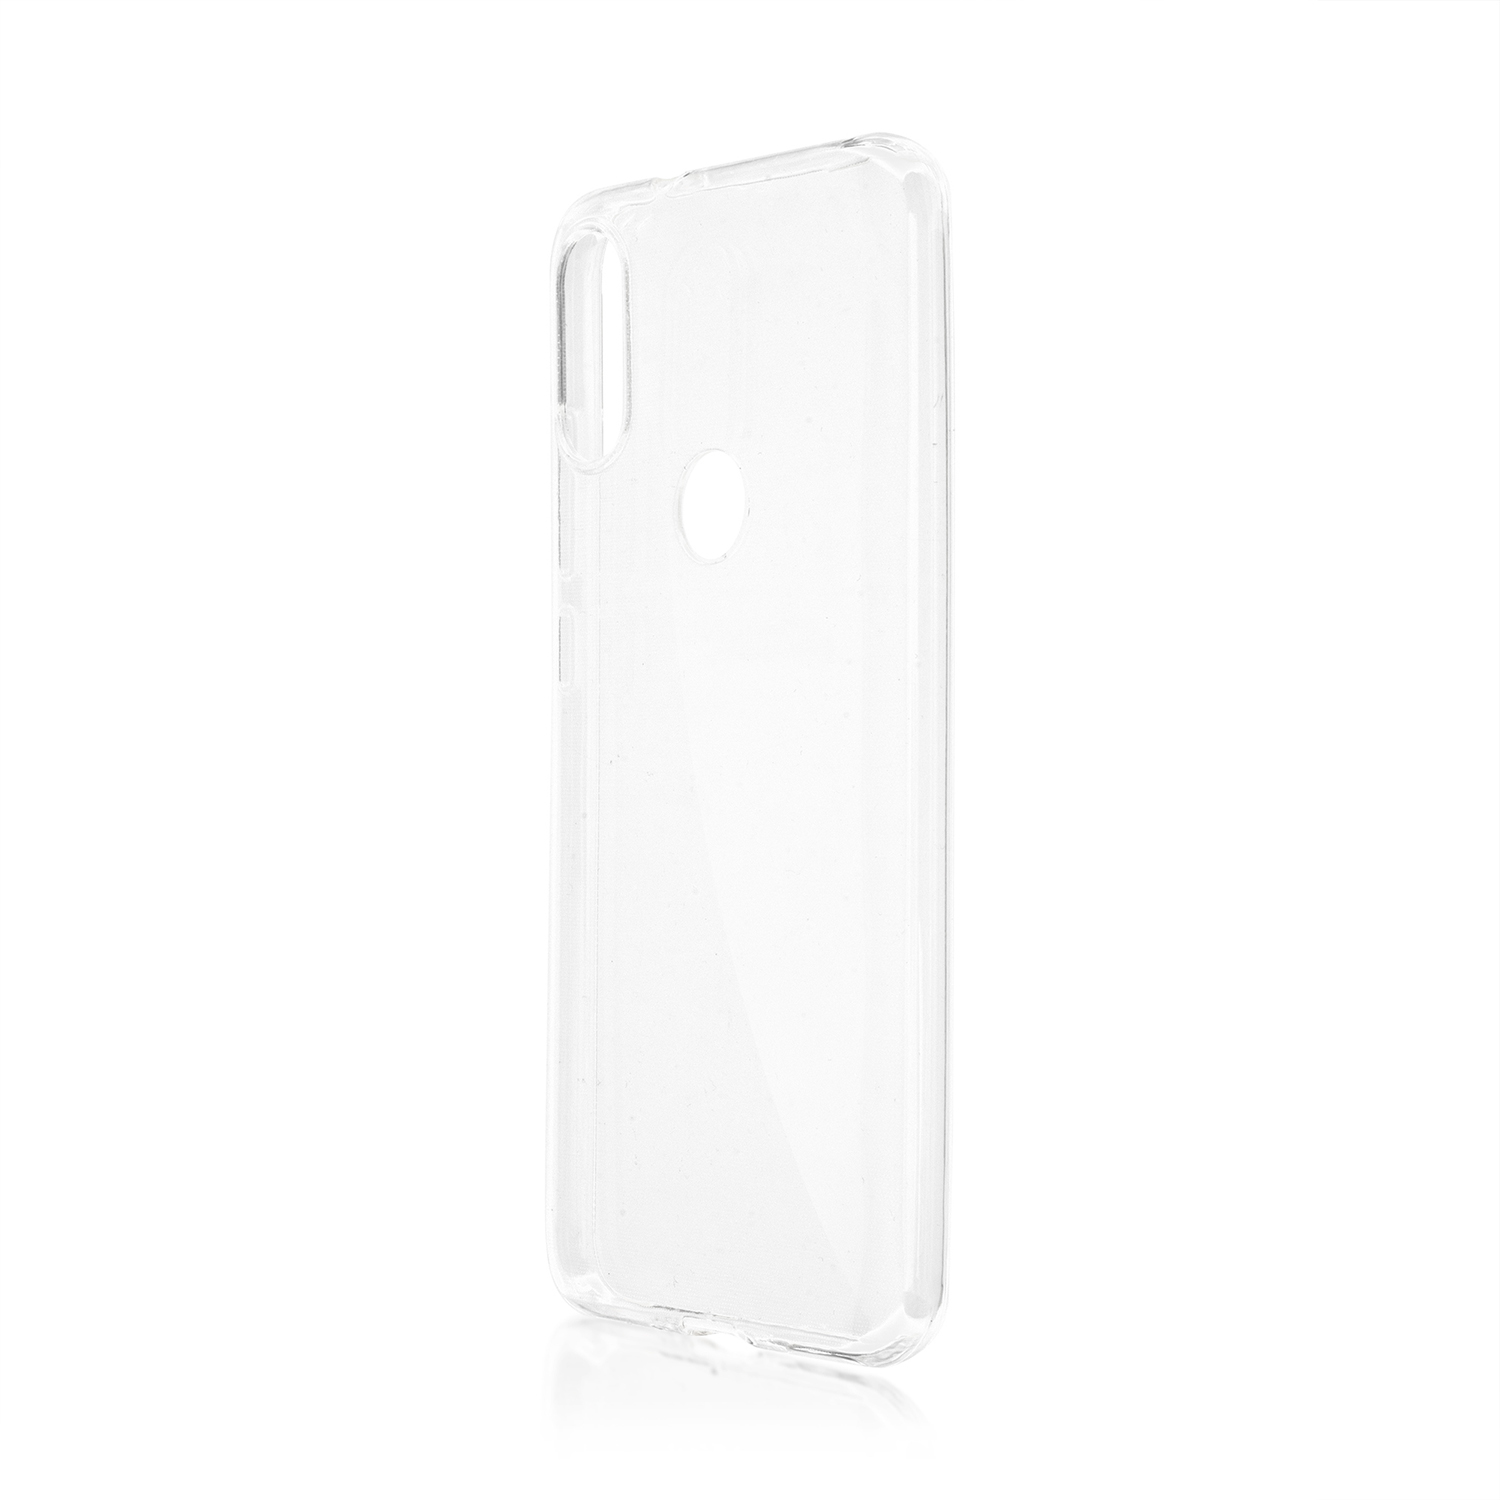 Силиконовый чехол BoraSCO для Xiaomi Mi Play прозрачный силиконовый чехол на xiaomi mi play молнии 9 для сяоми ми плей